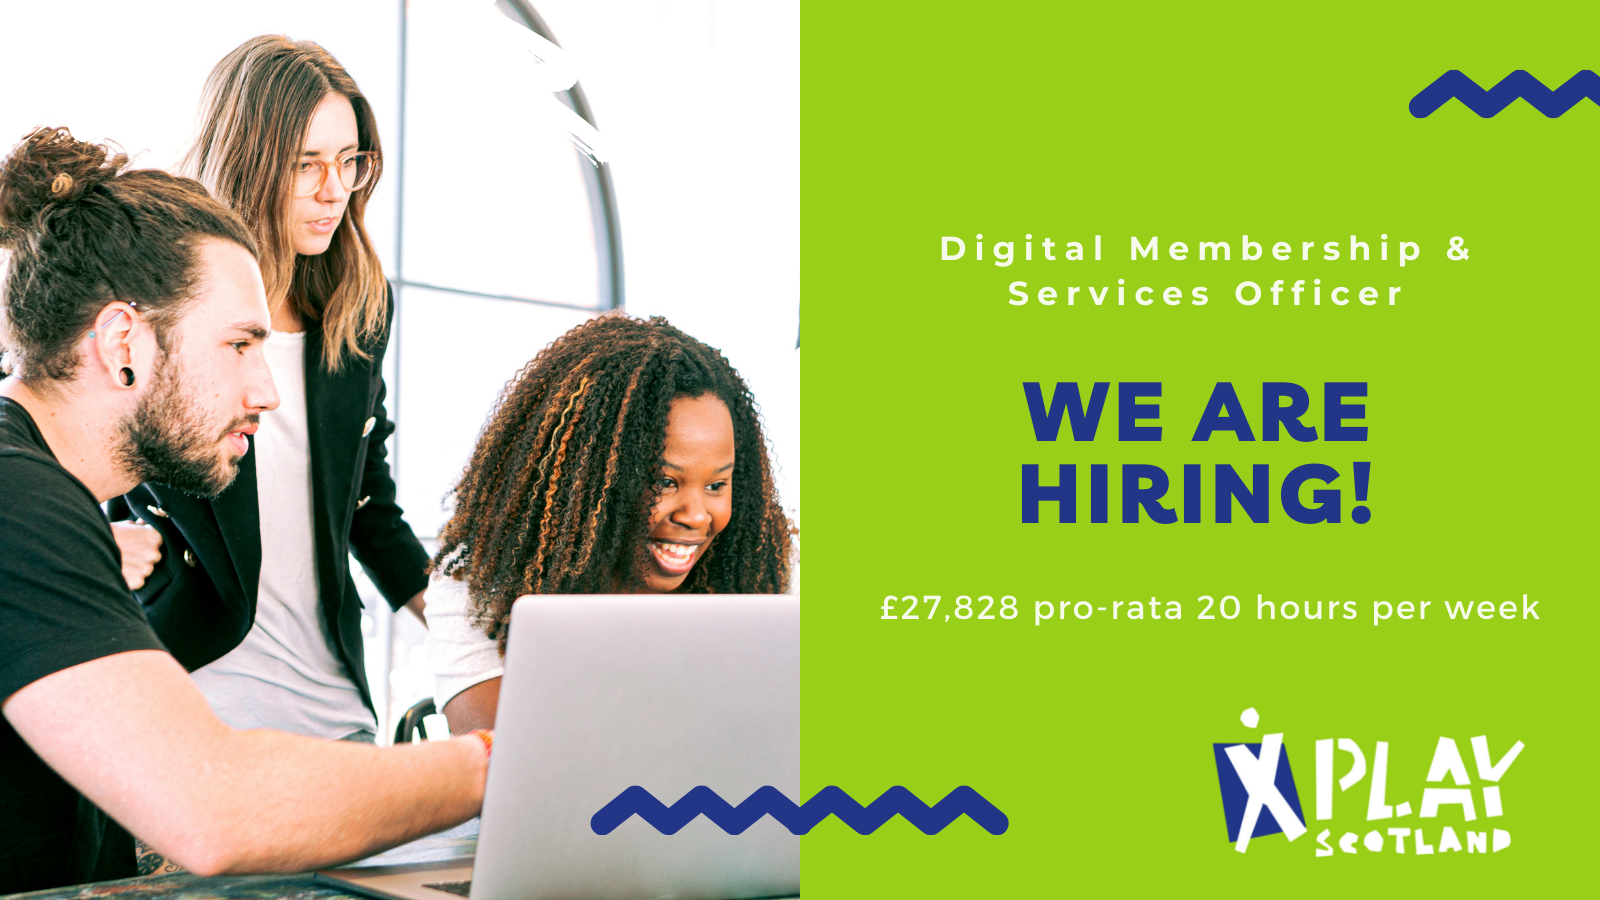 We are hiring Digital Membership & Services Officer £27,828 pro-rata 20 hours per week